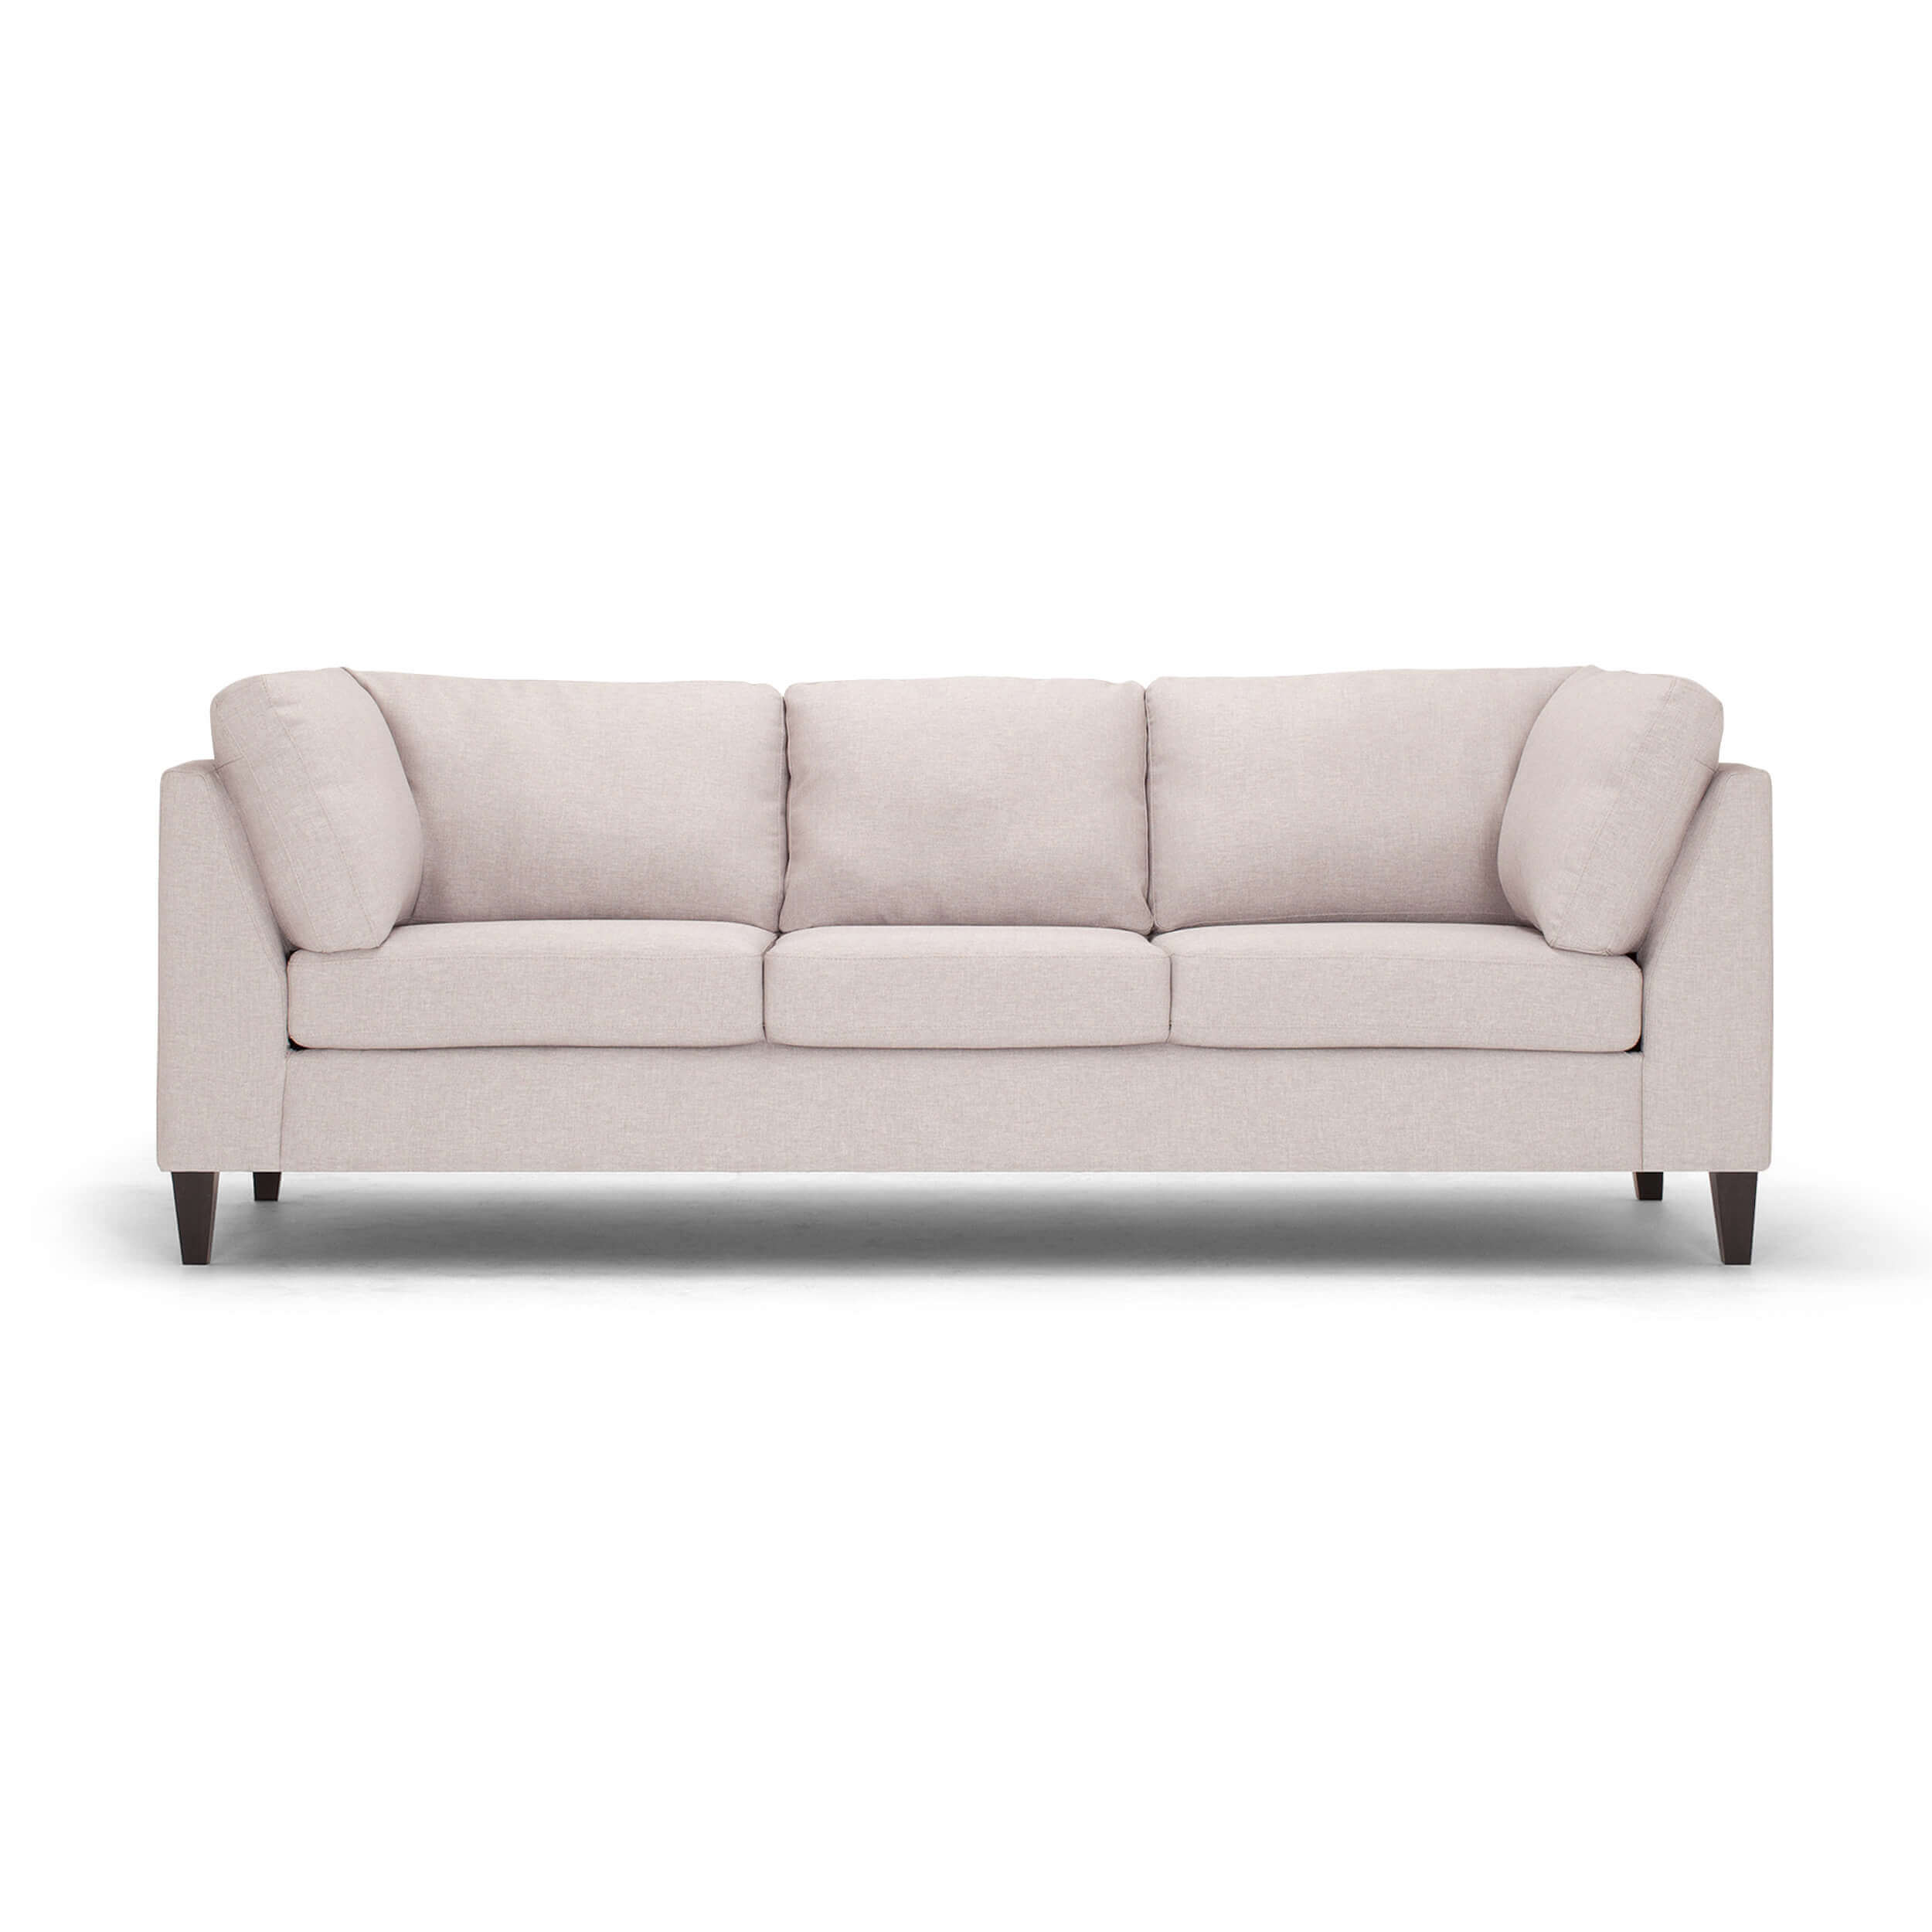 Salema Sofa | Custom Modern Leather Couch from EQ3